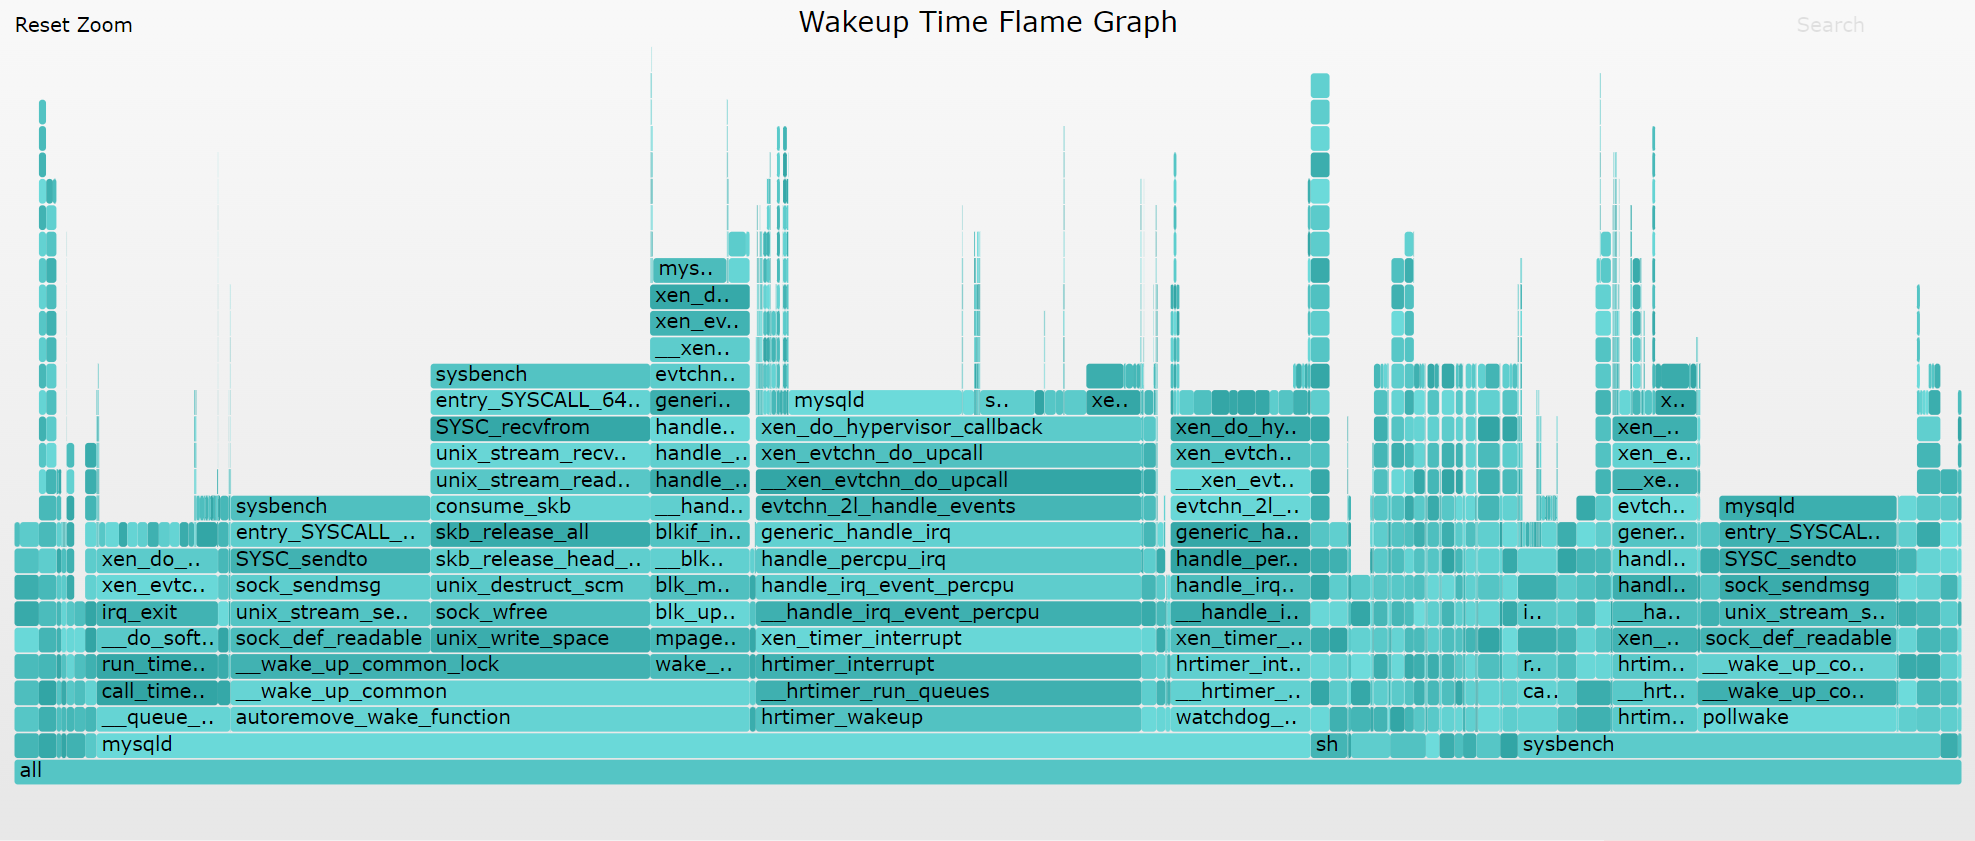 wakeup time - https://www.brendangregg.com/FlameGraphs/offcpuflamegraphs.html